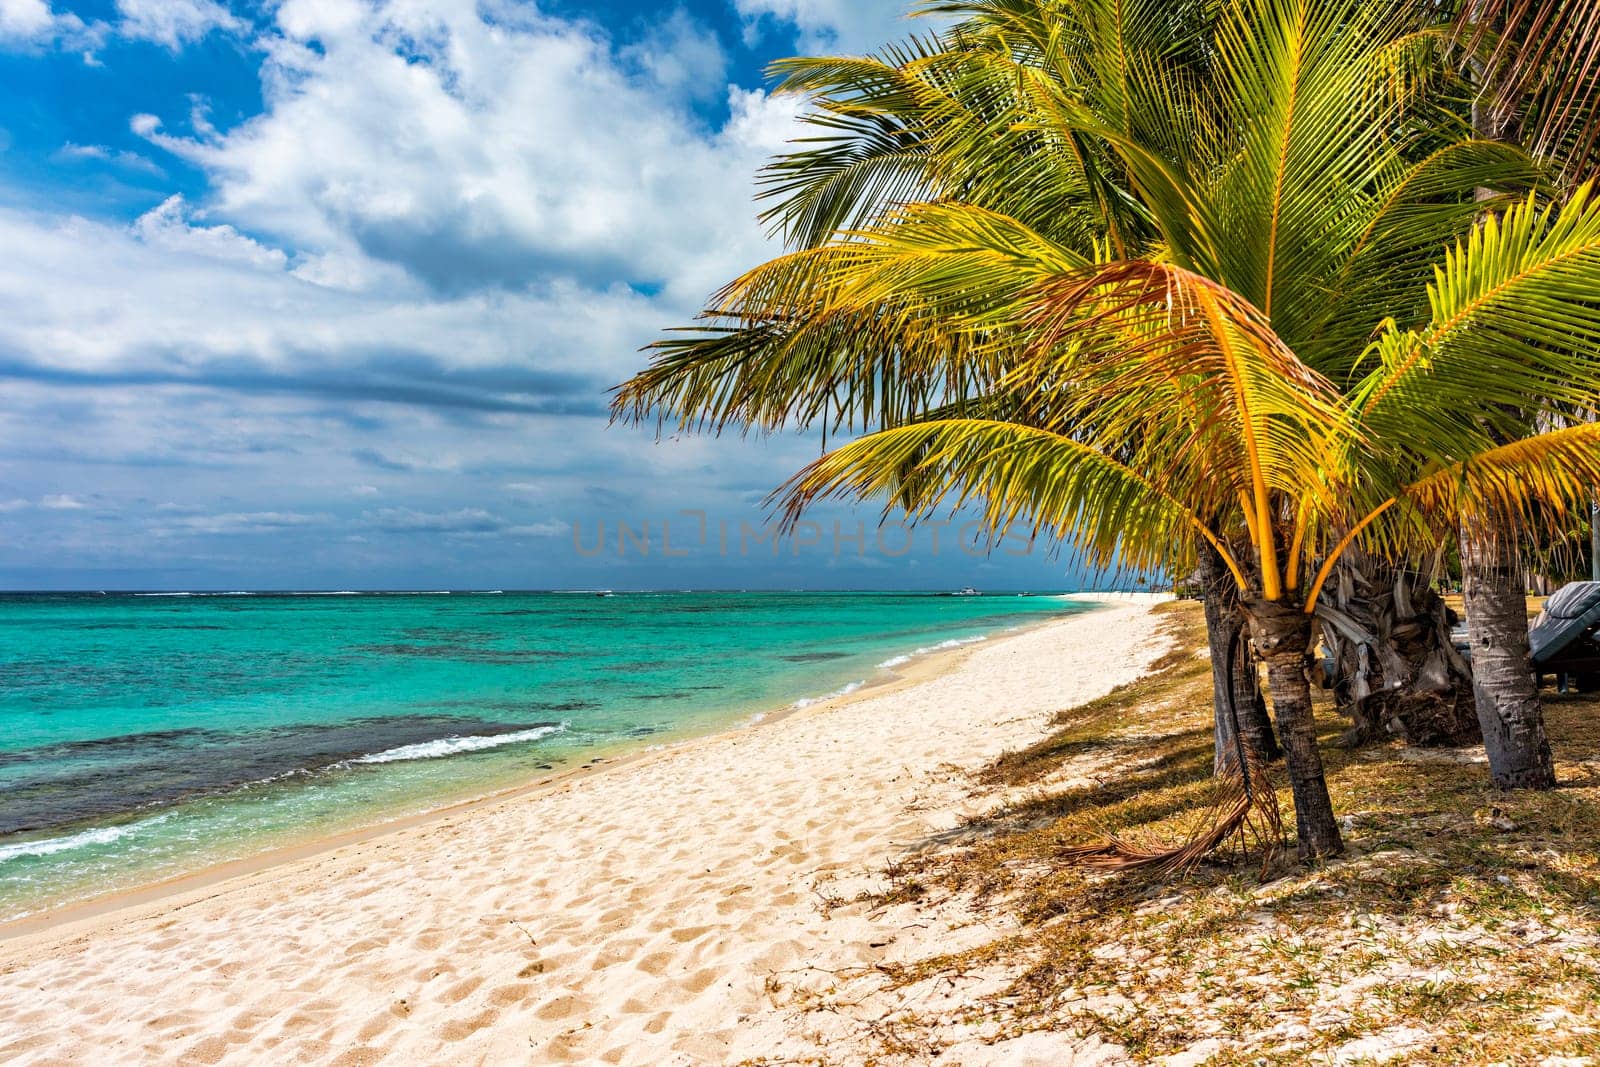 Tropical beach scenery, vacation in paradise island Mauritius. Dream exotic island, tropical paradise. Best beaches of Mauritius island, luxury resorts of Mauritius, Indian Ocean, Africa. by DaLiu